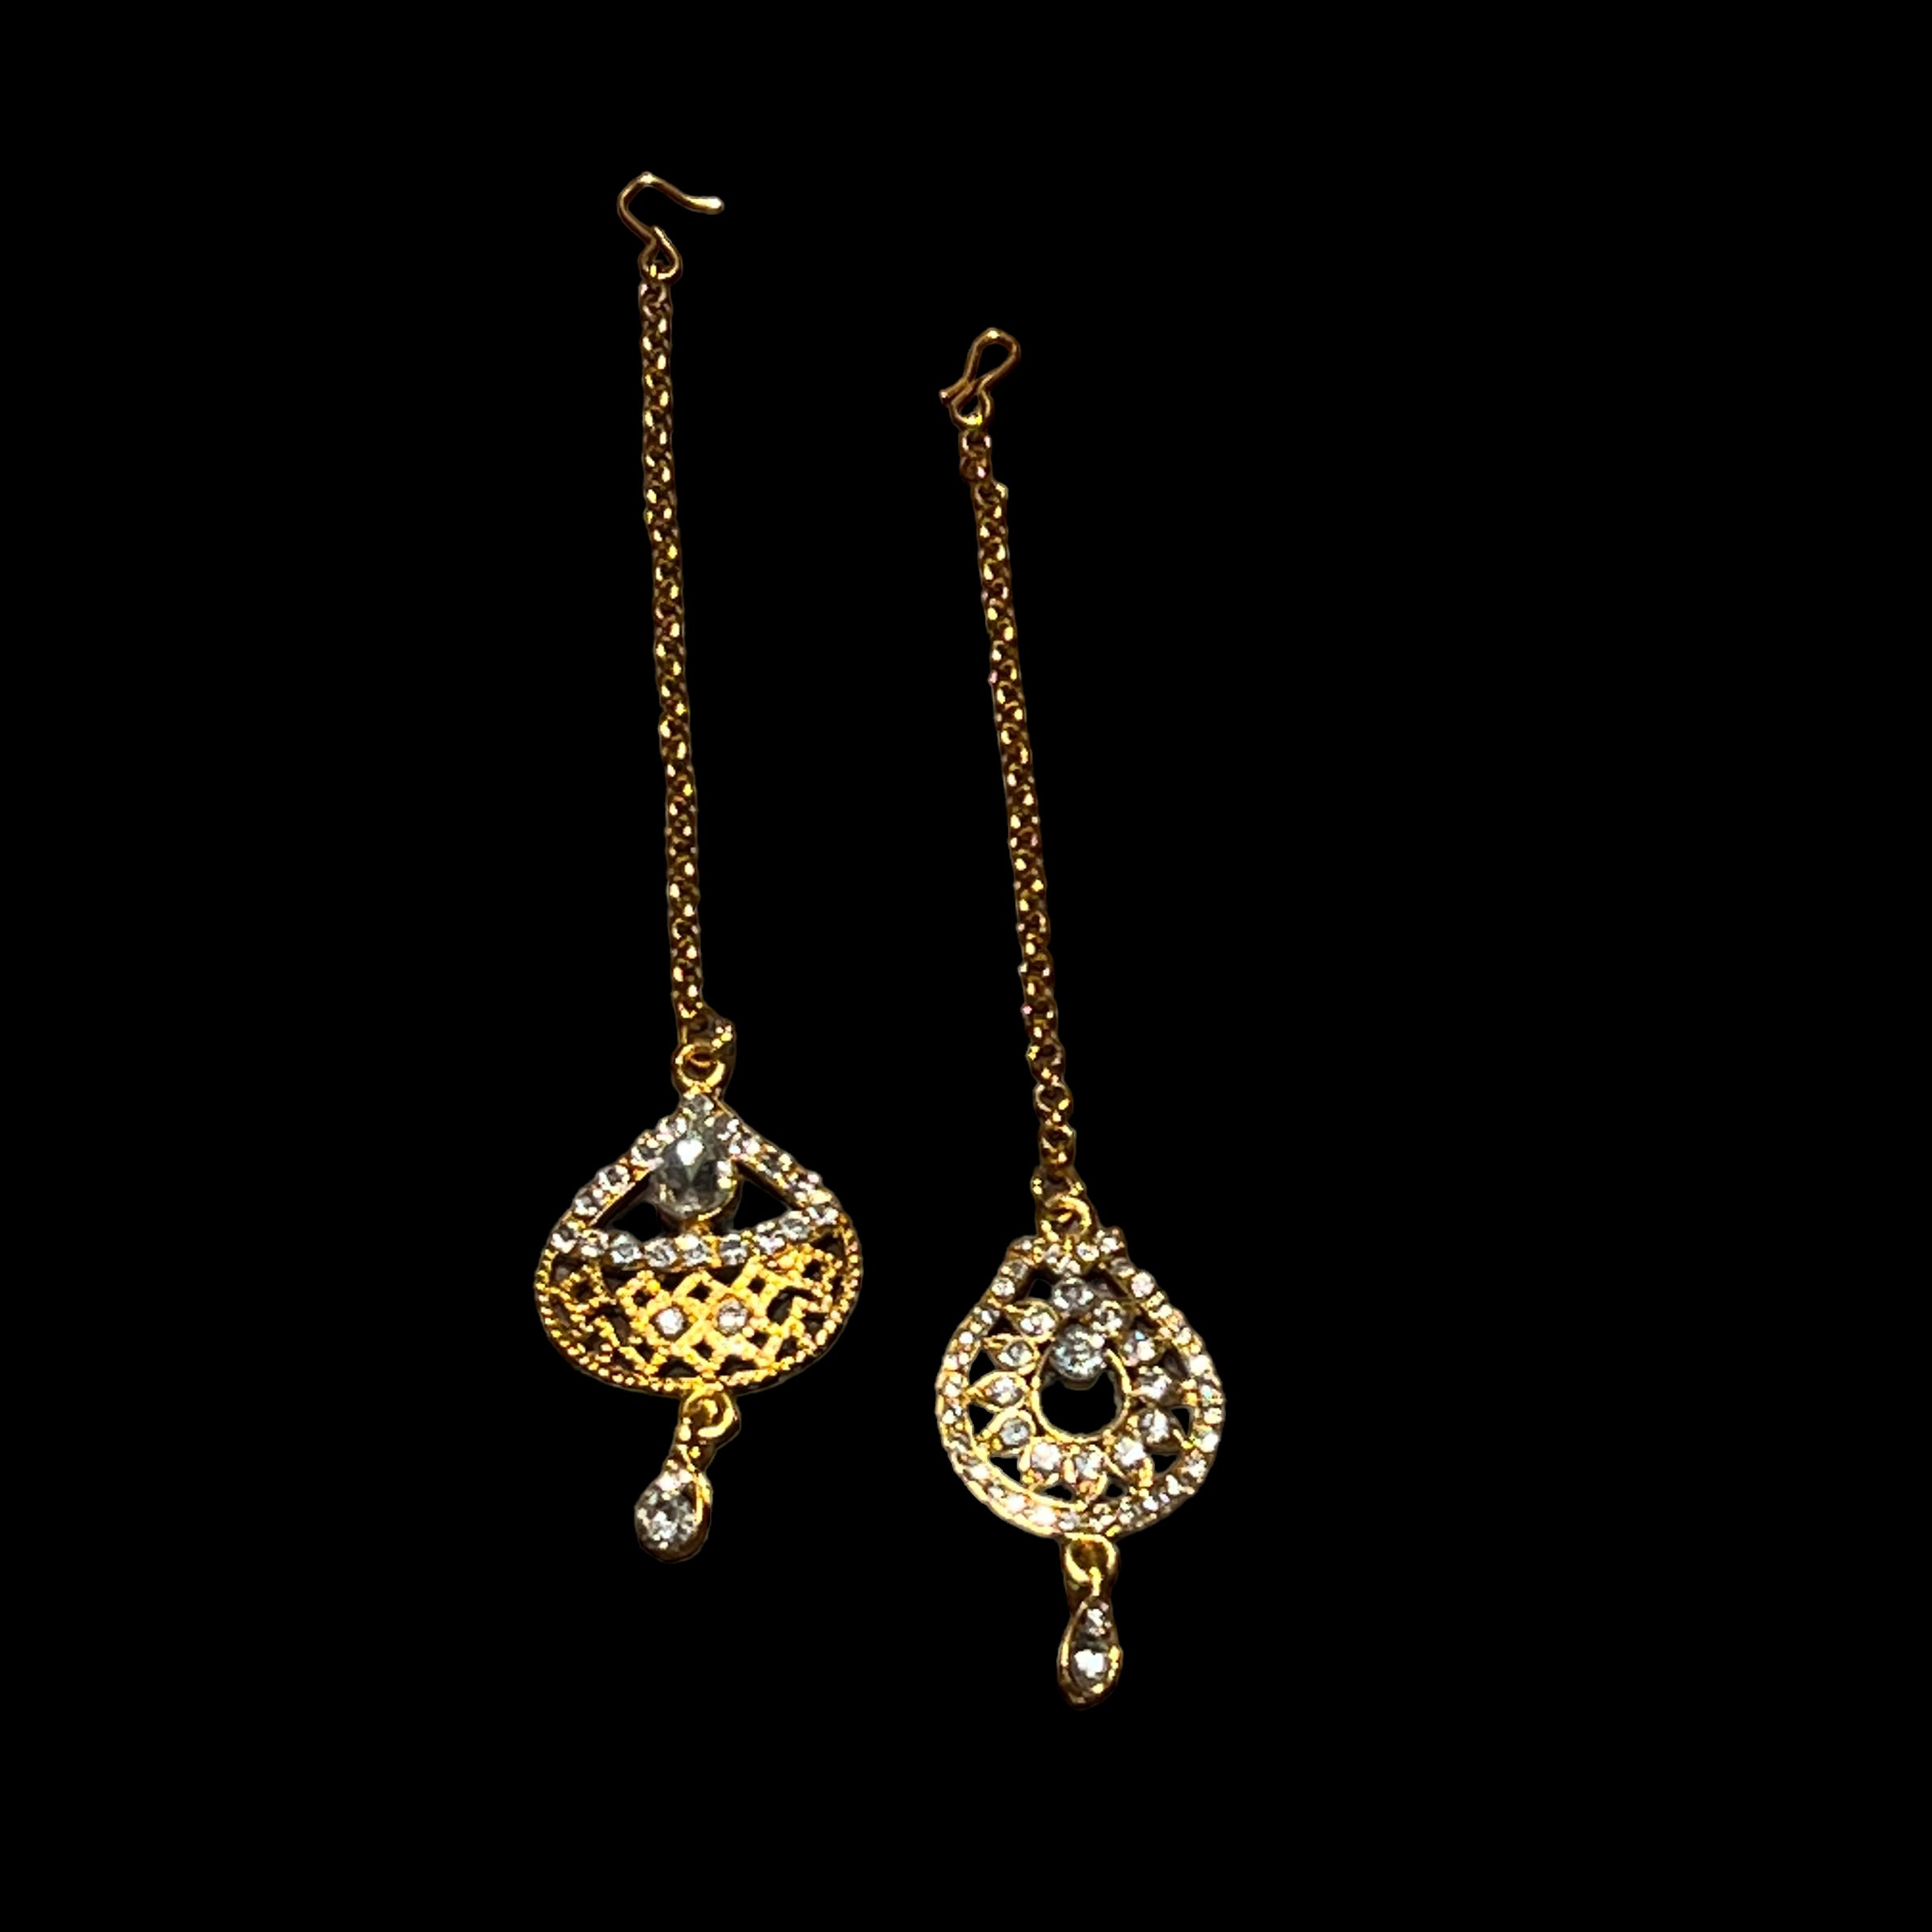 Small Gold Maang Tikkas-2 Styles - Vintage India NYC